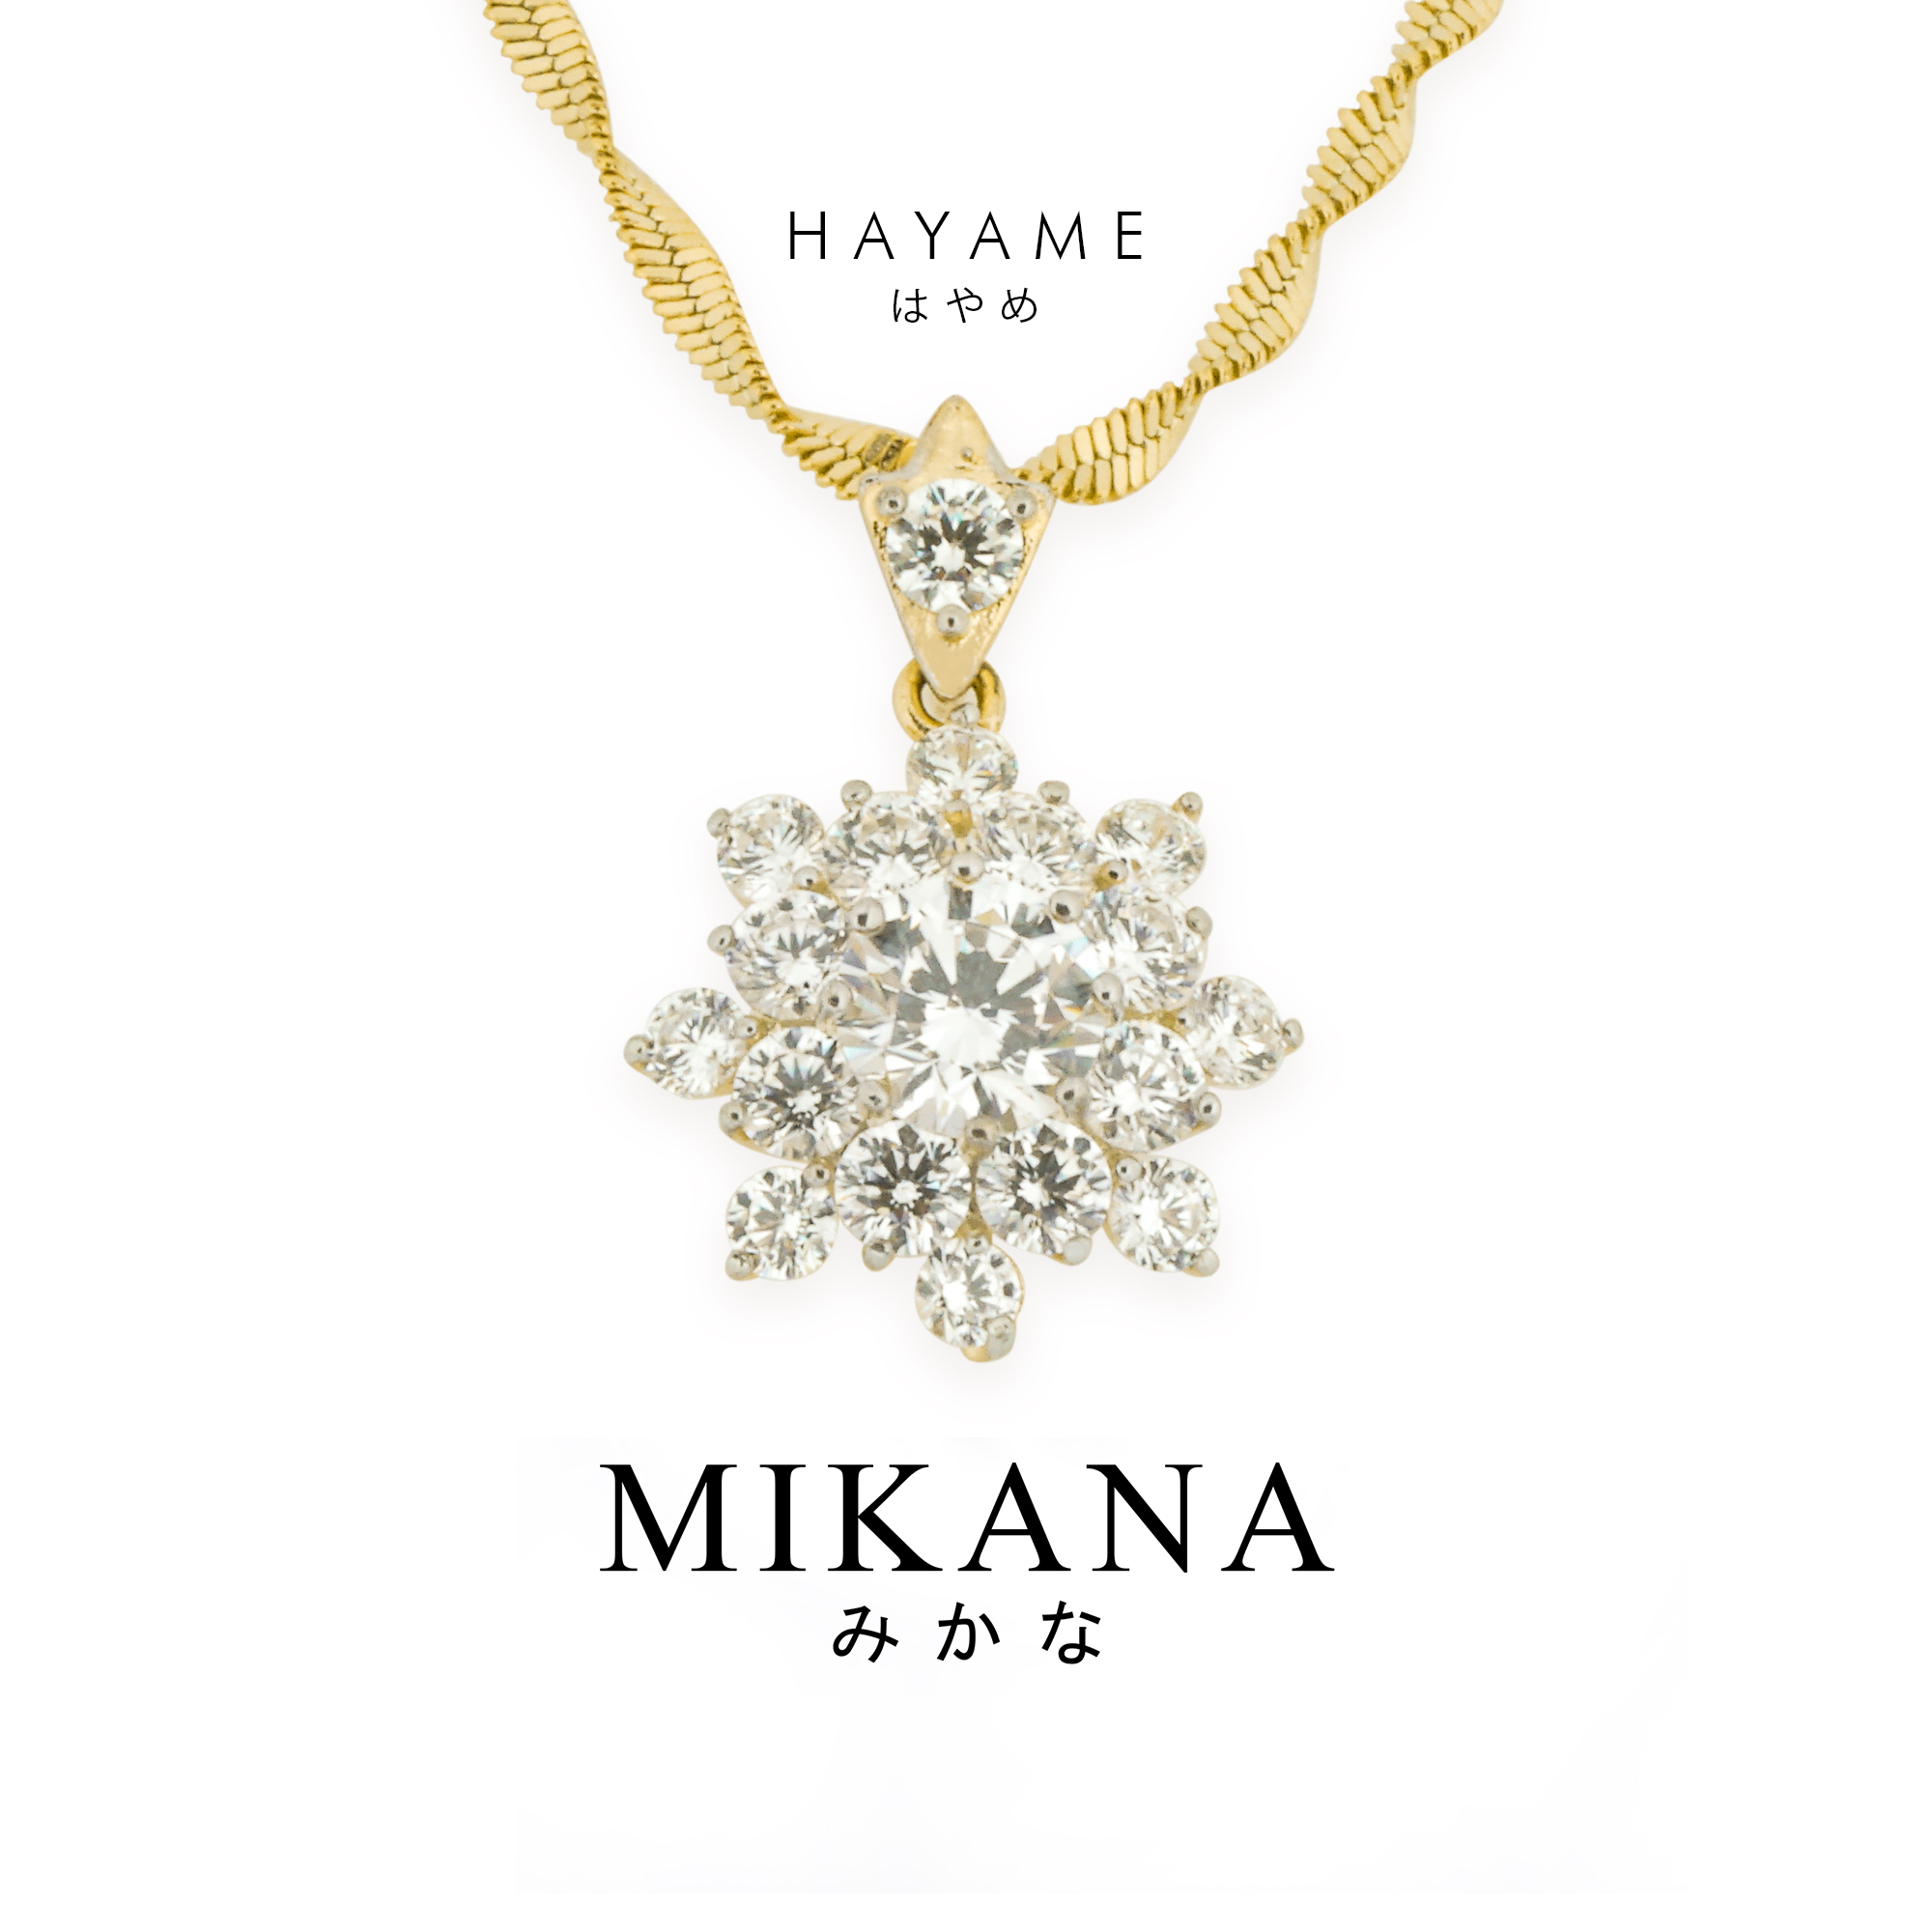 Hayame Pendant Necklace